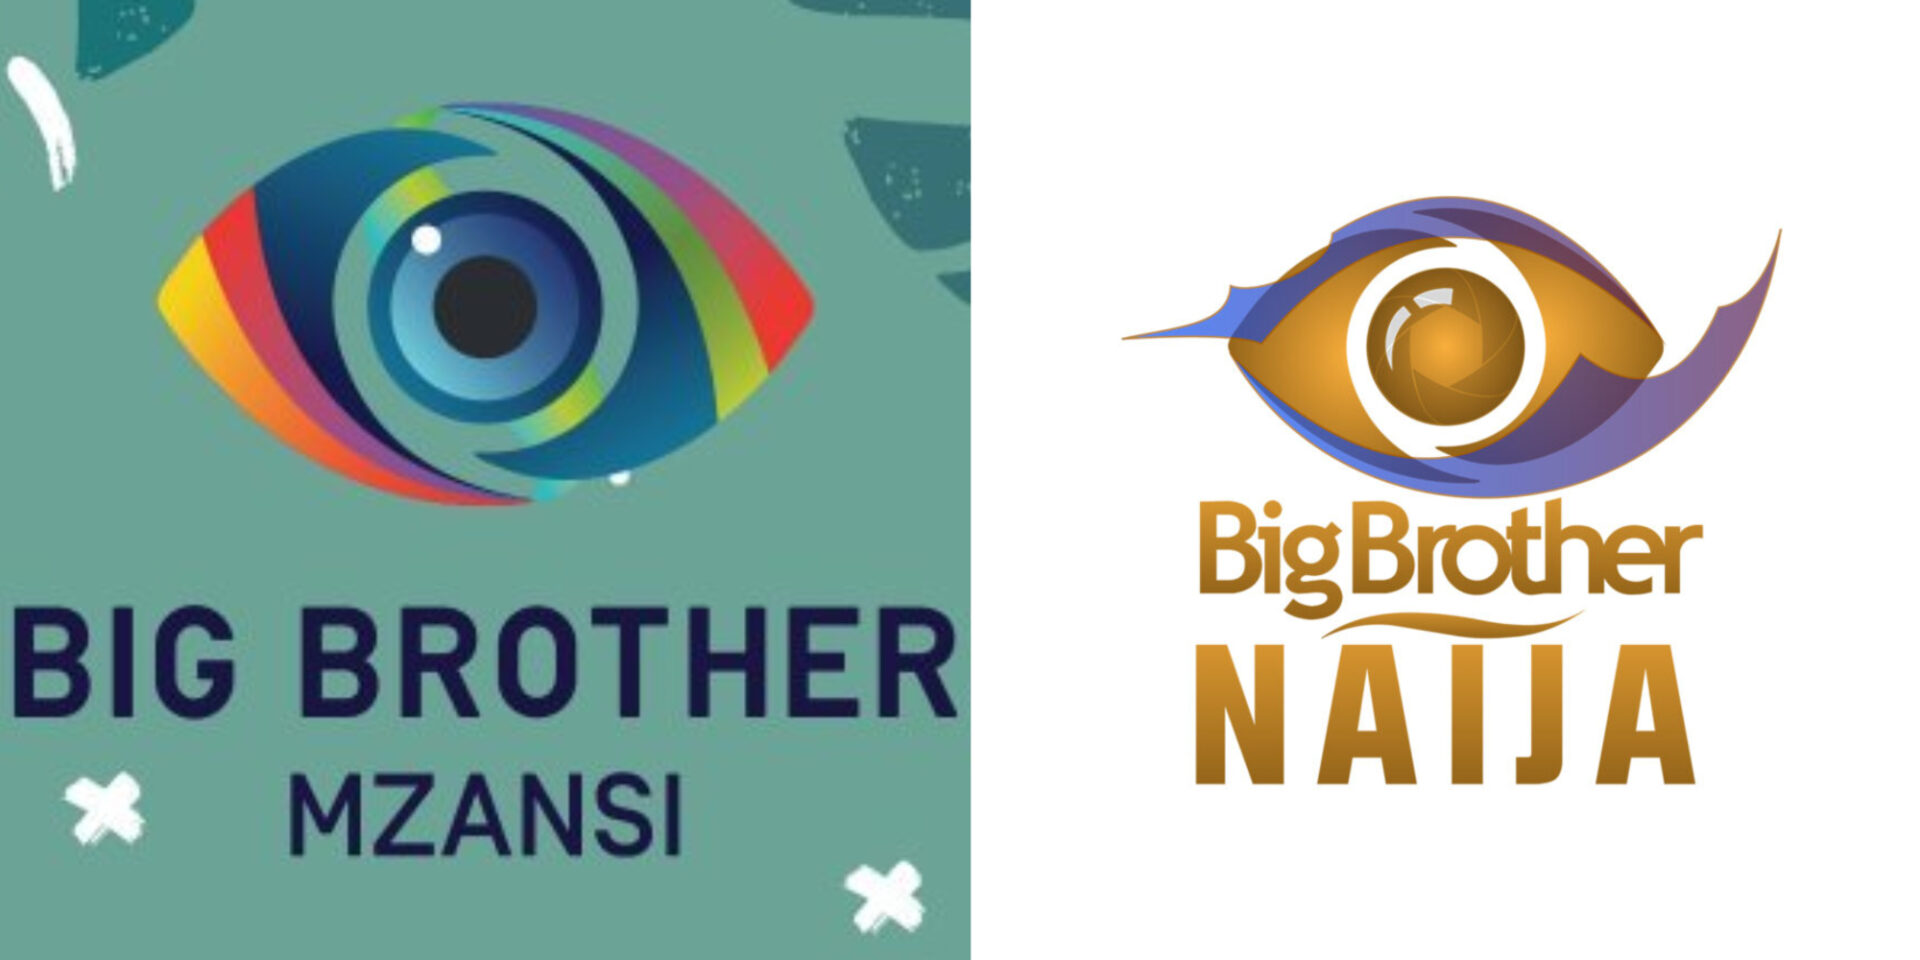 Big Brother Naija and Big Brother Mzansi